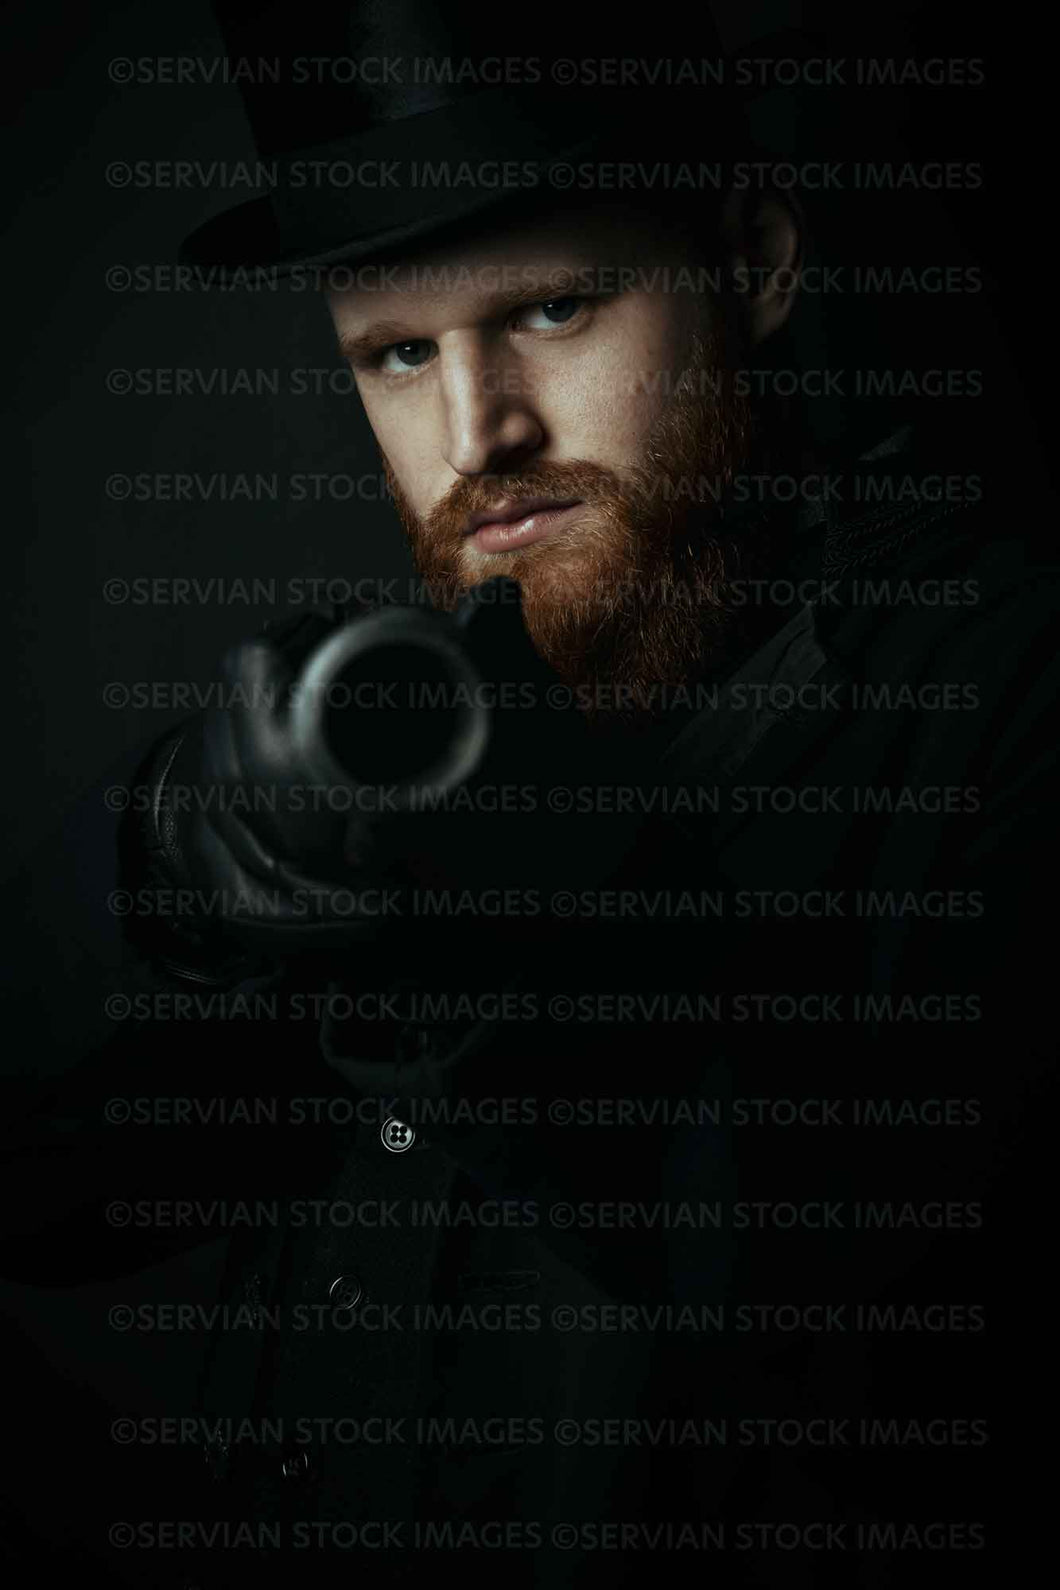 Victorian man wearing a top hat and holding a gun (Luke 5214)